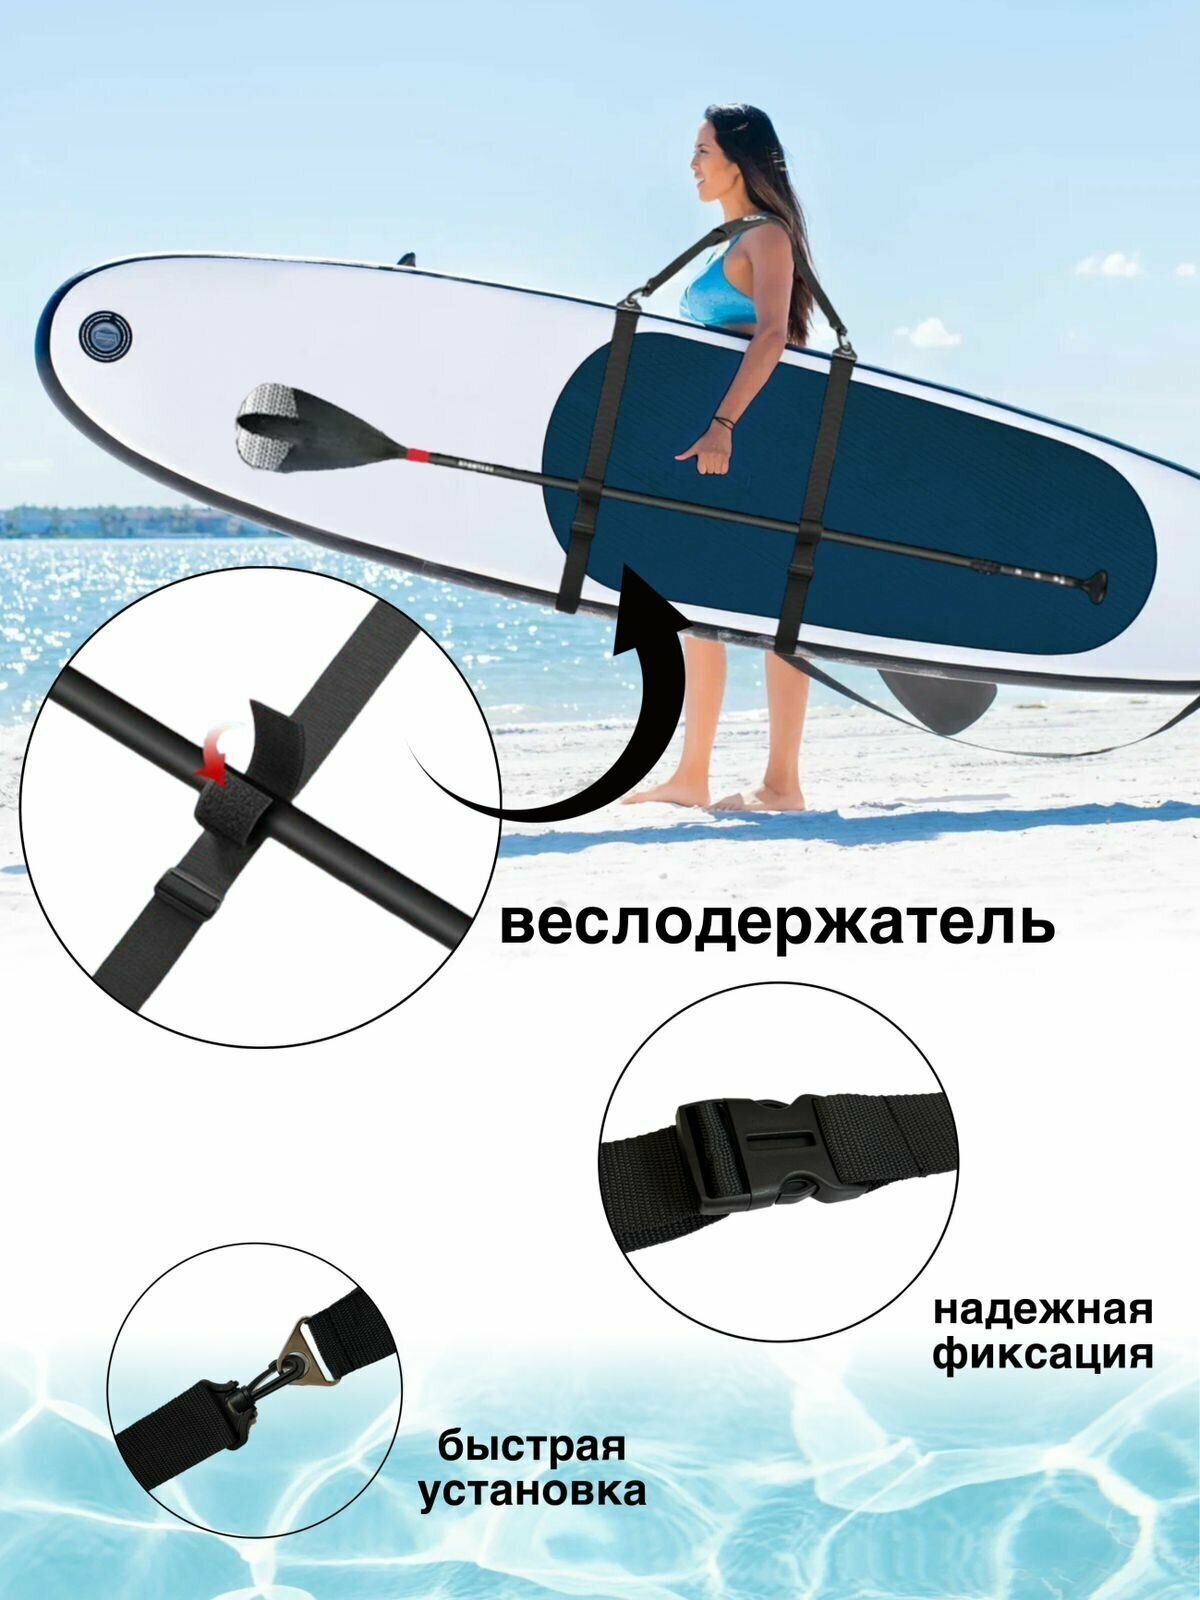 Ремень для переноски sup доски, Плечевой ремень для доски для серфинга Sup Board